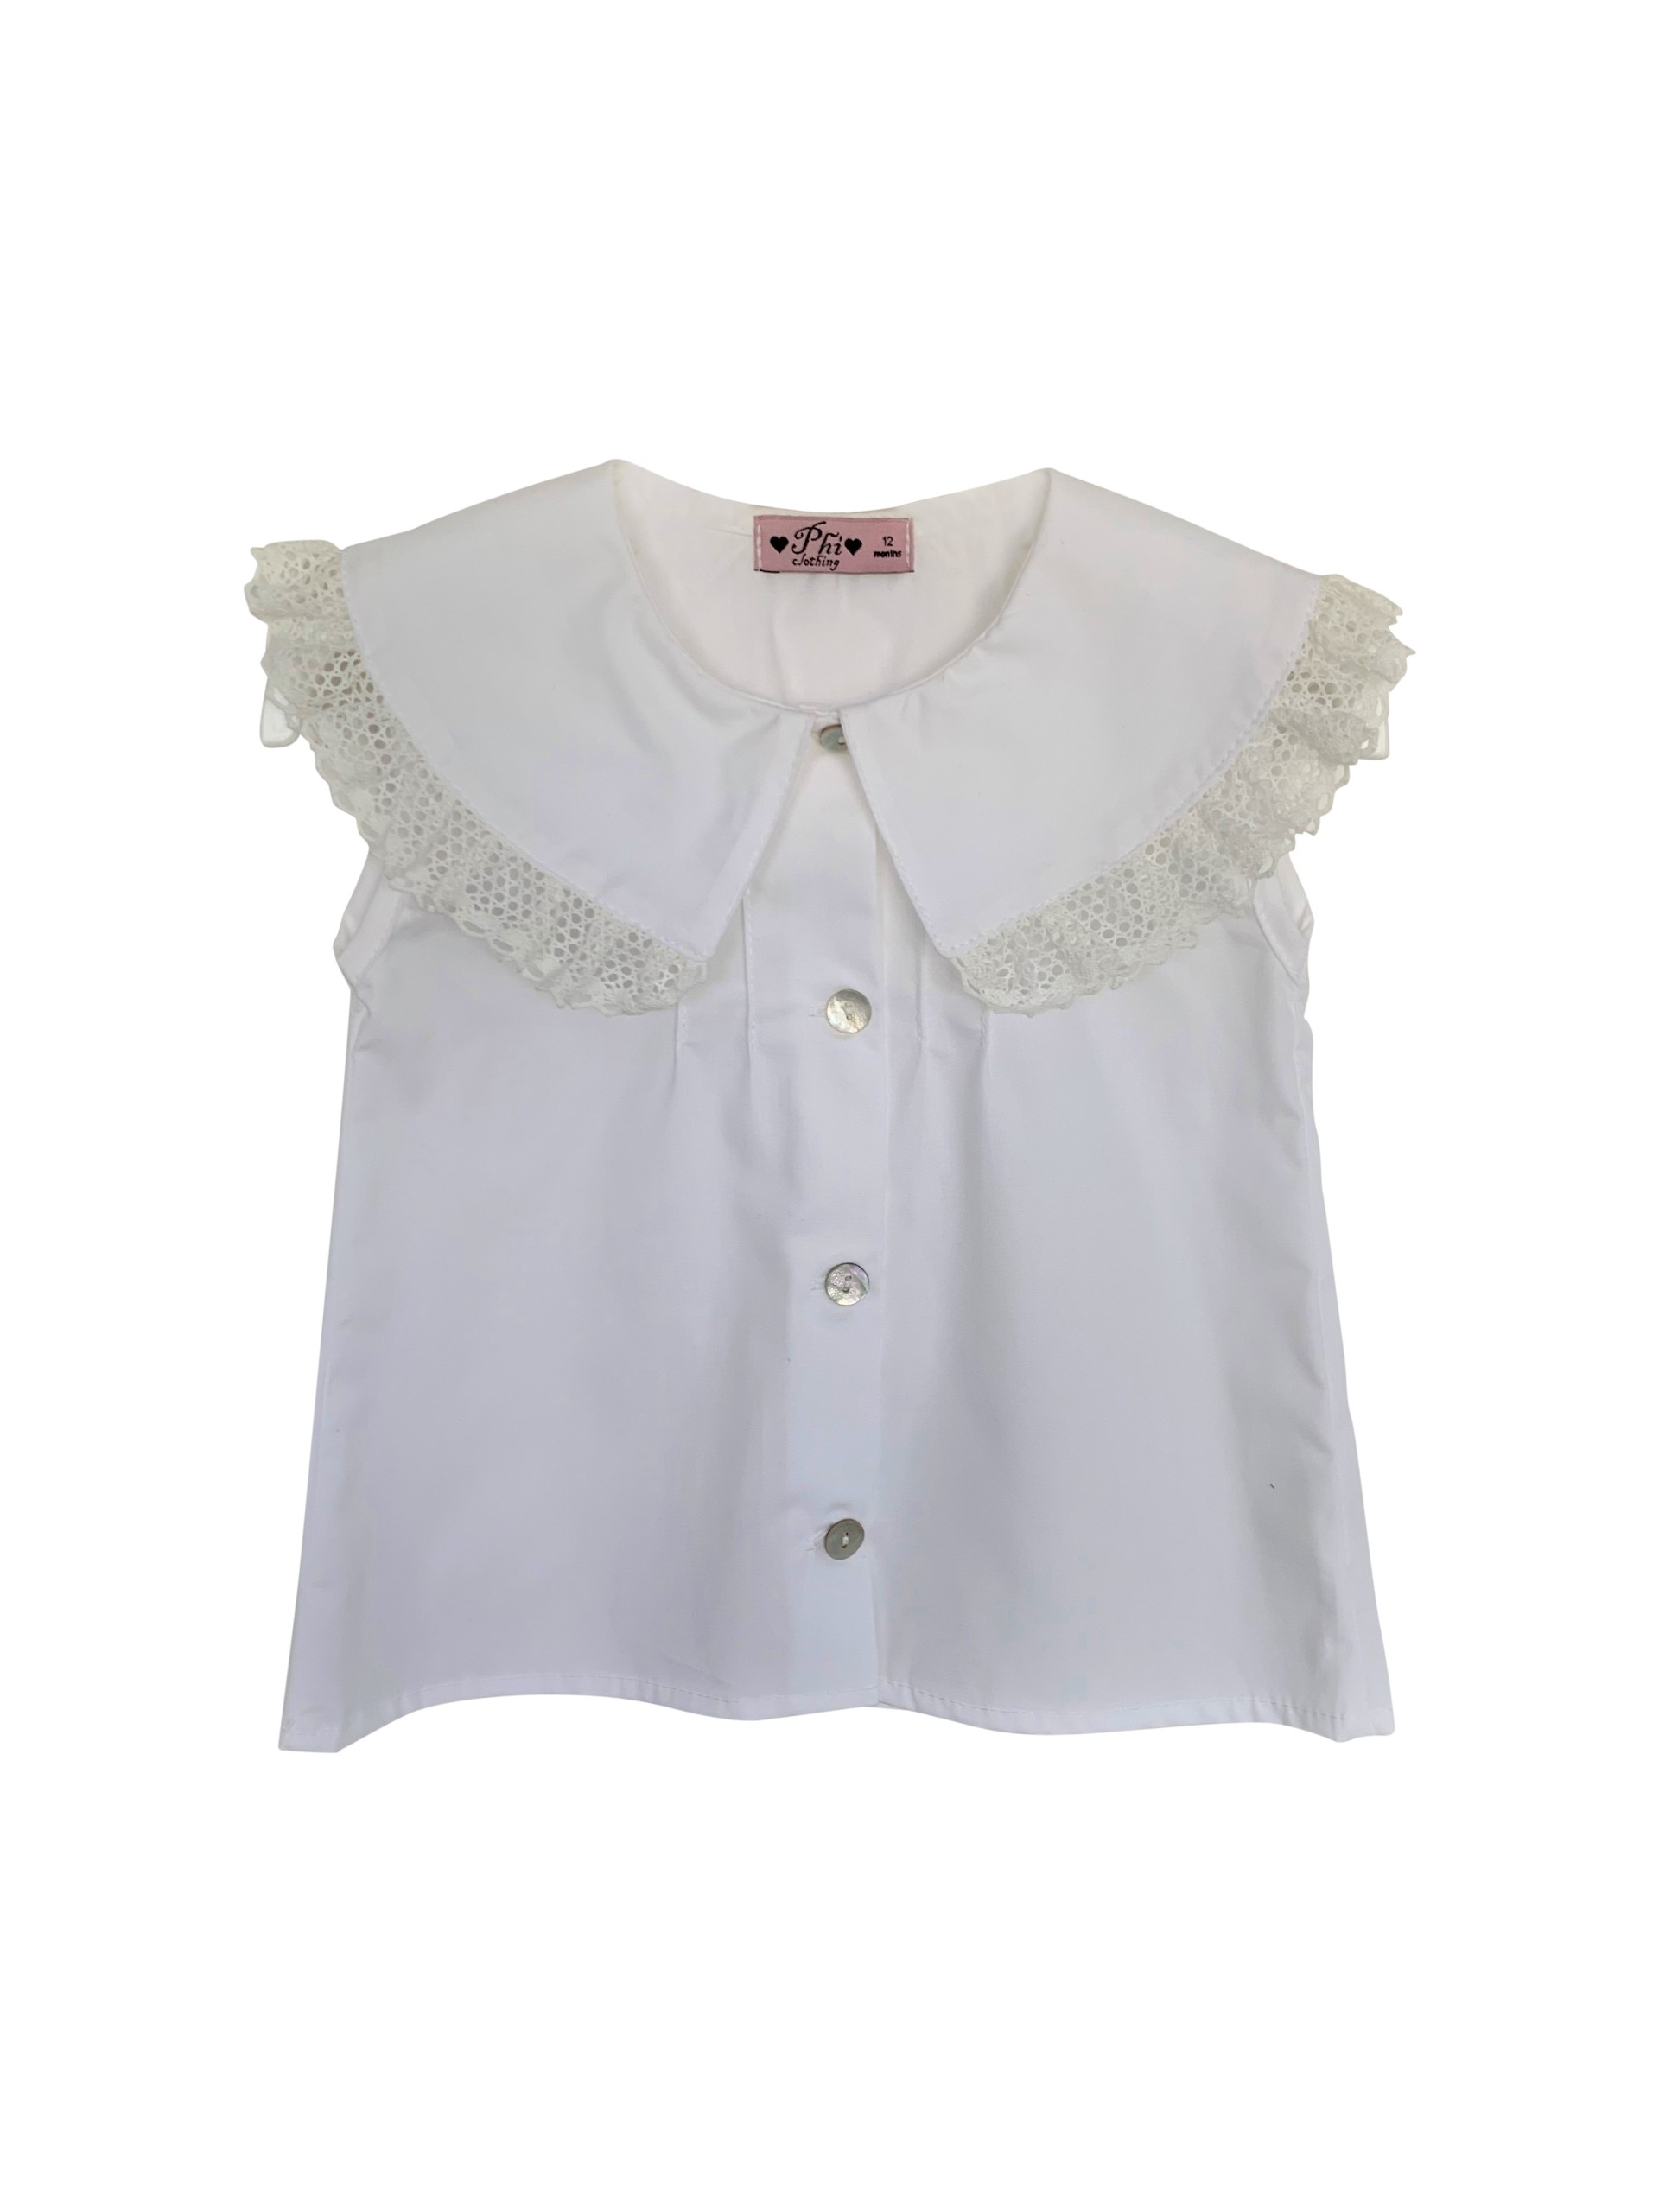 White collar blouse